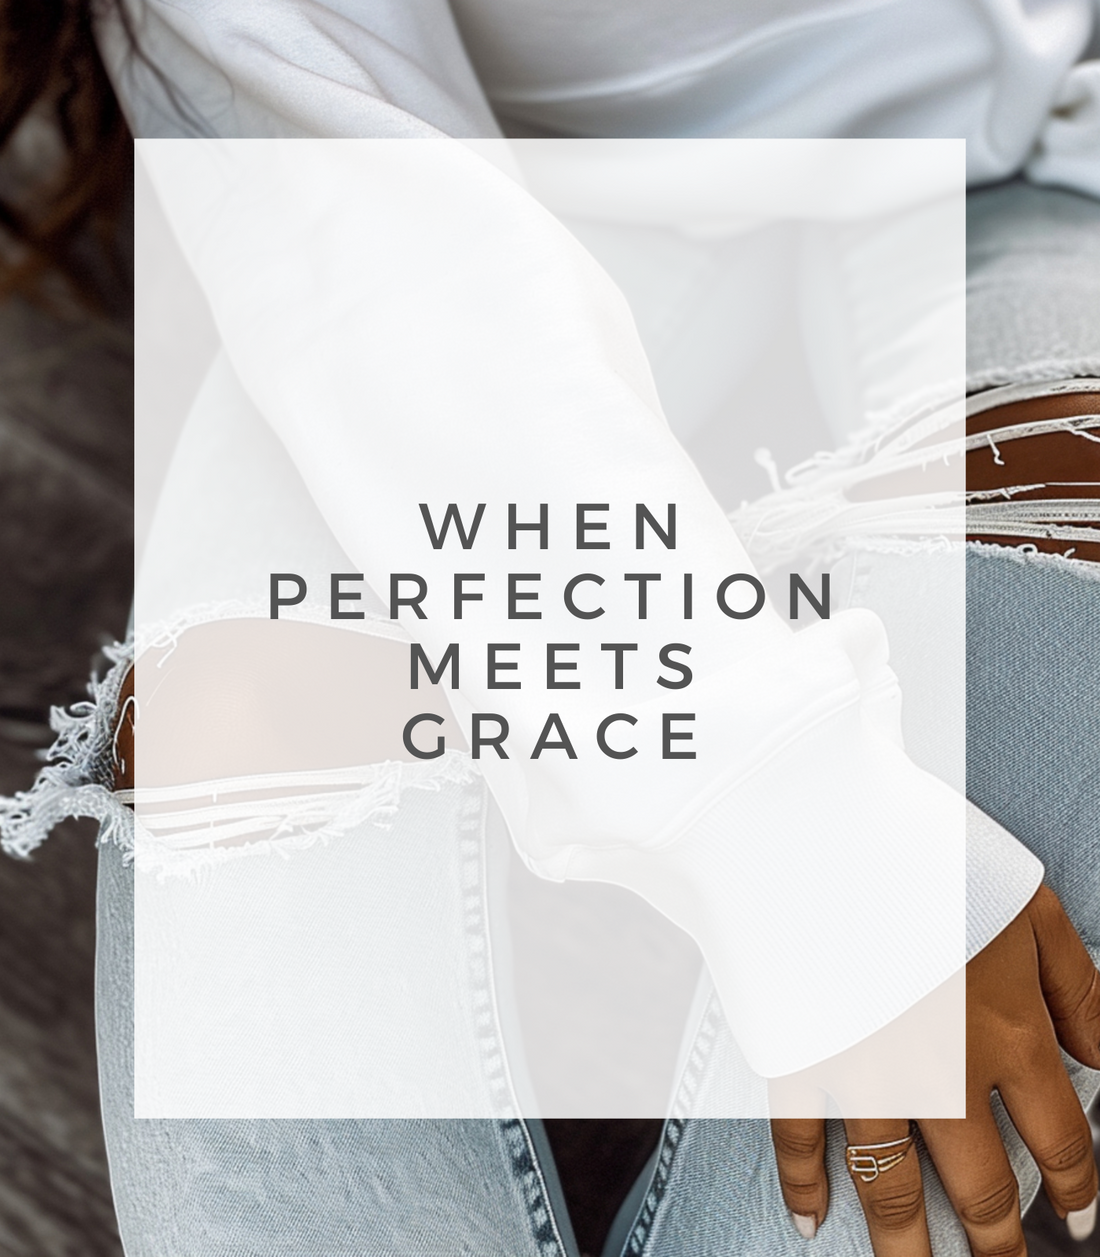 When perfection meets grace